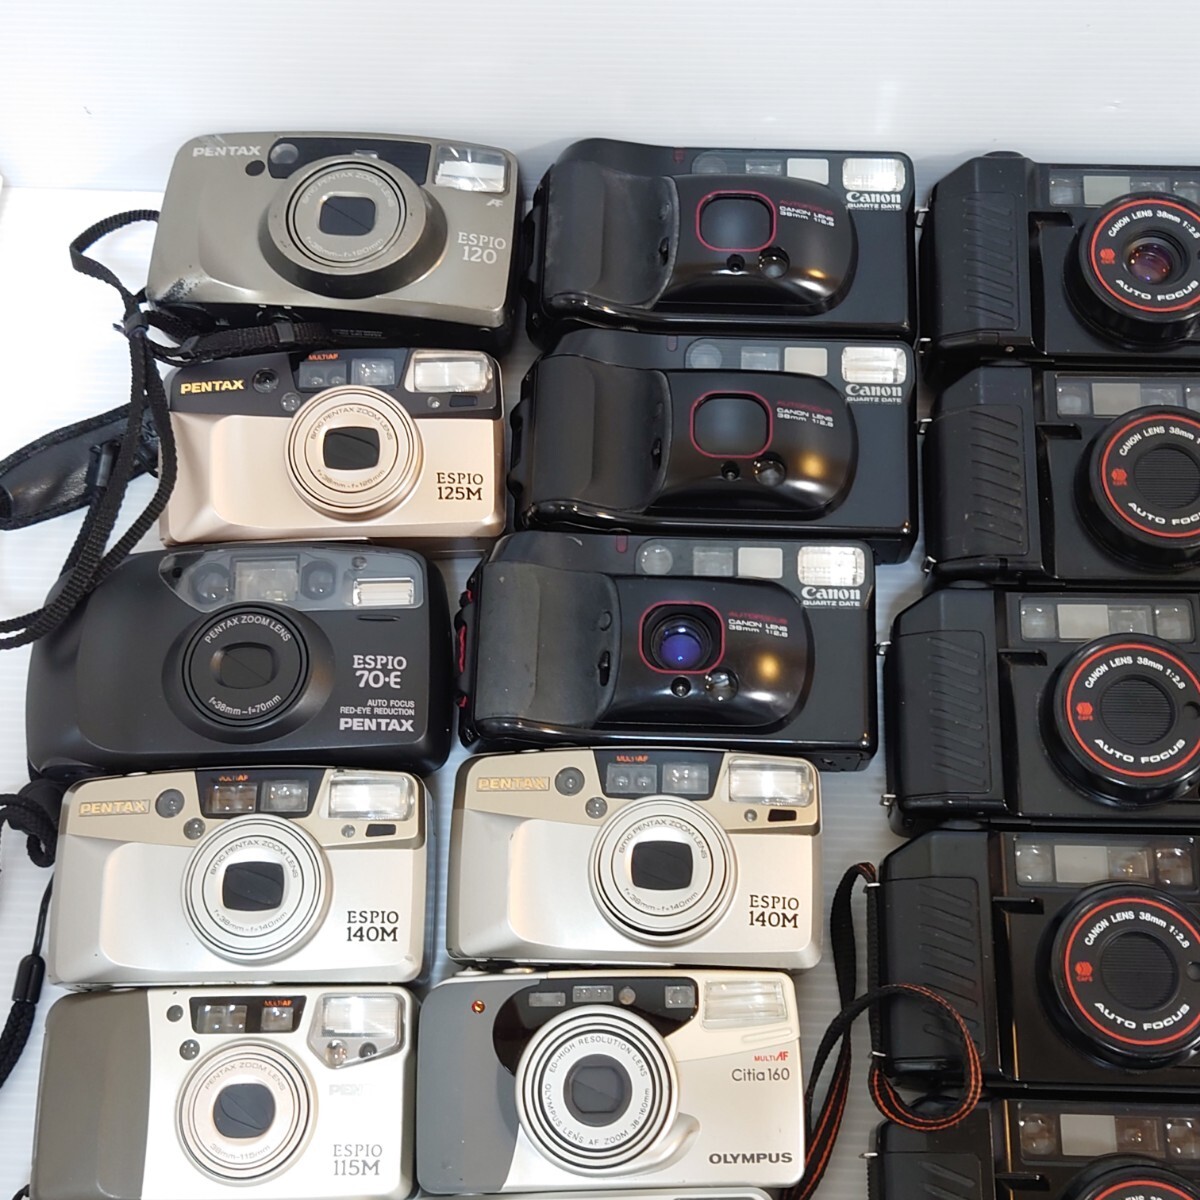 mi1)1 jpy ~ Junk camera set sale large amount set Canon OLYMPUS Pentax Konica compact film optics camera retro 